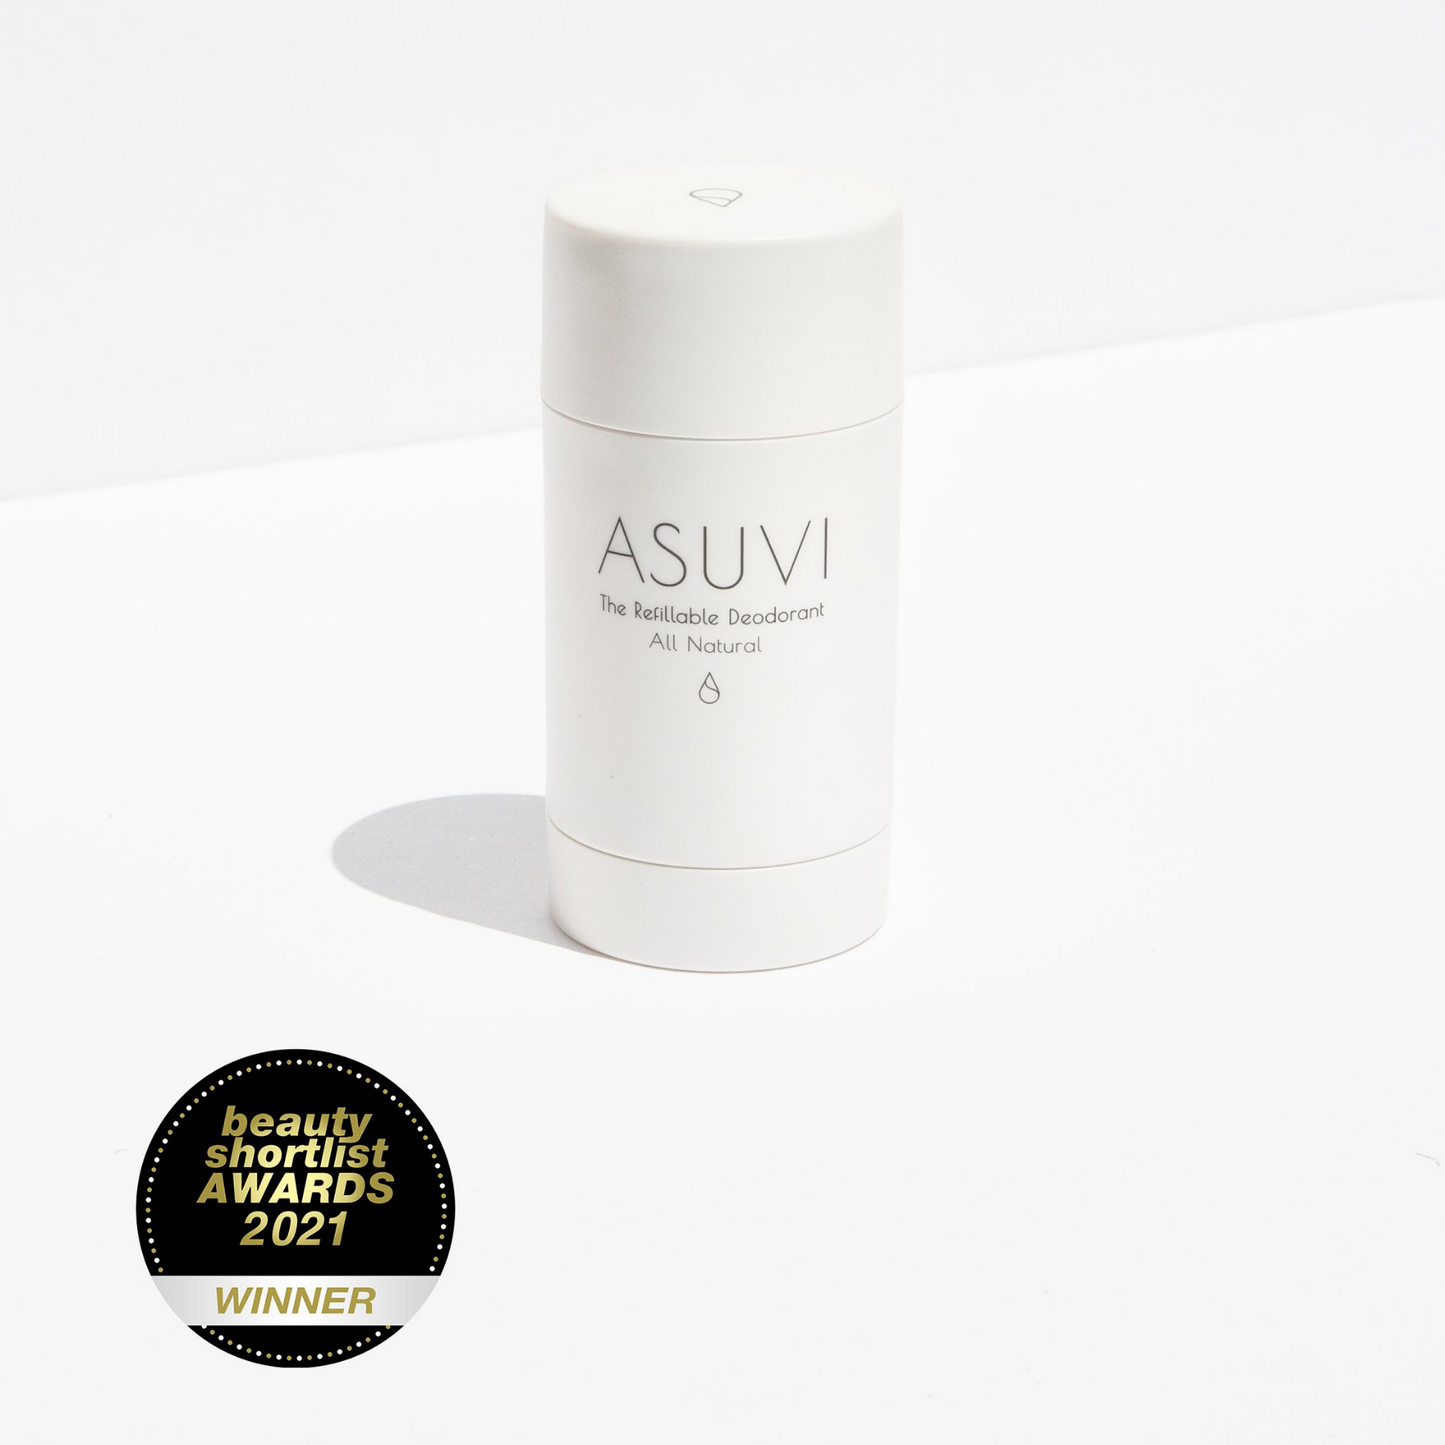 ASUVI Deodorant Angophora 65g, Reusable Tube Or Refill